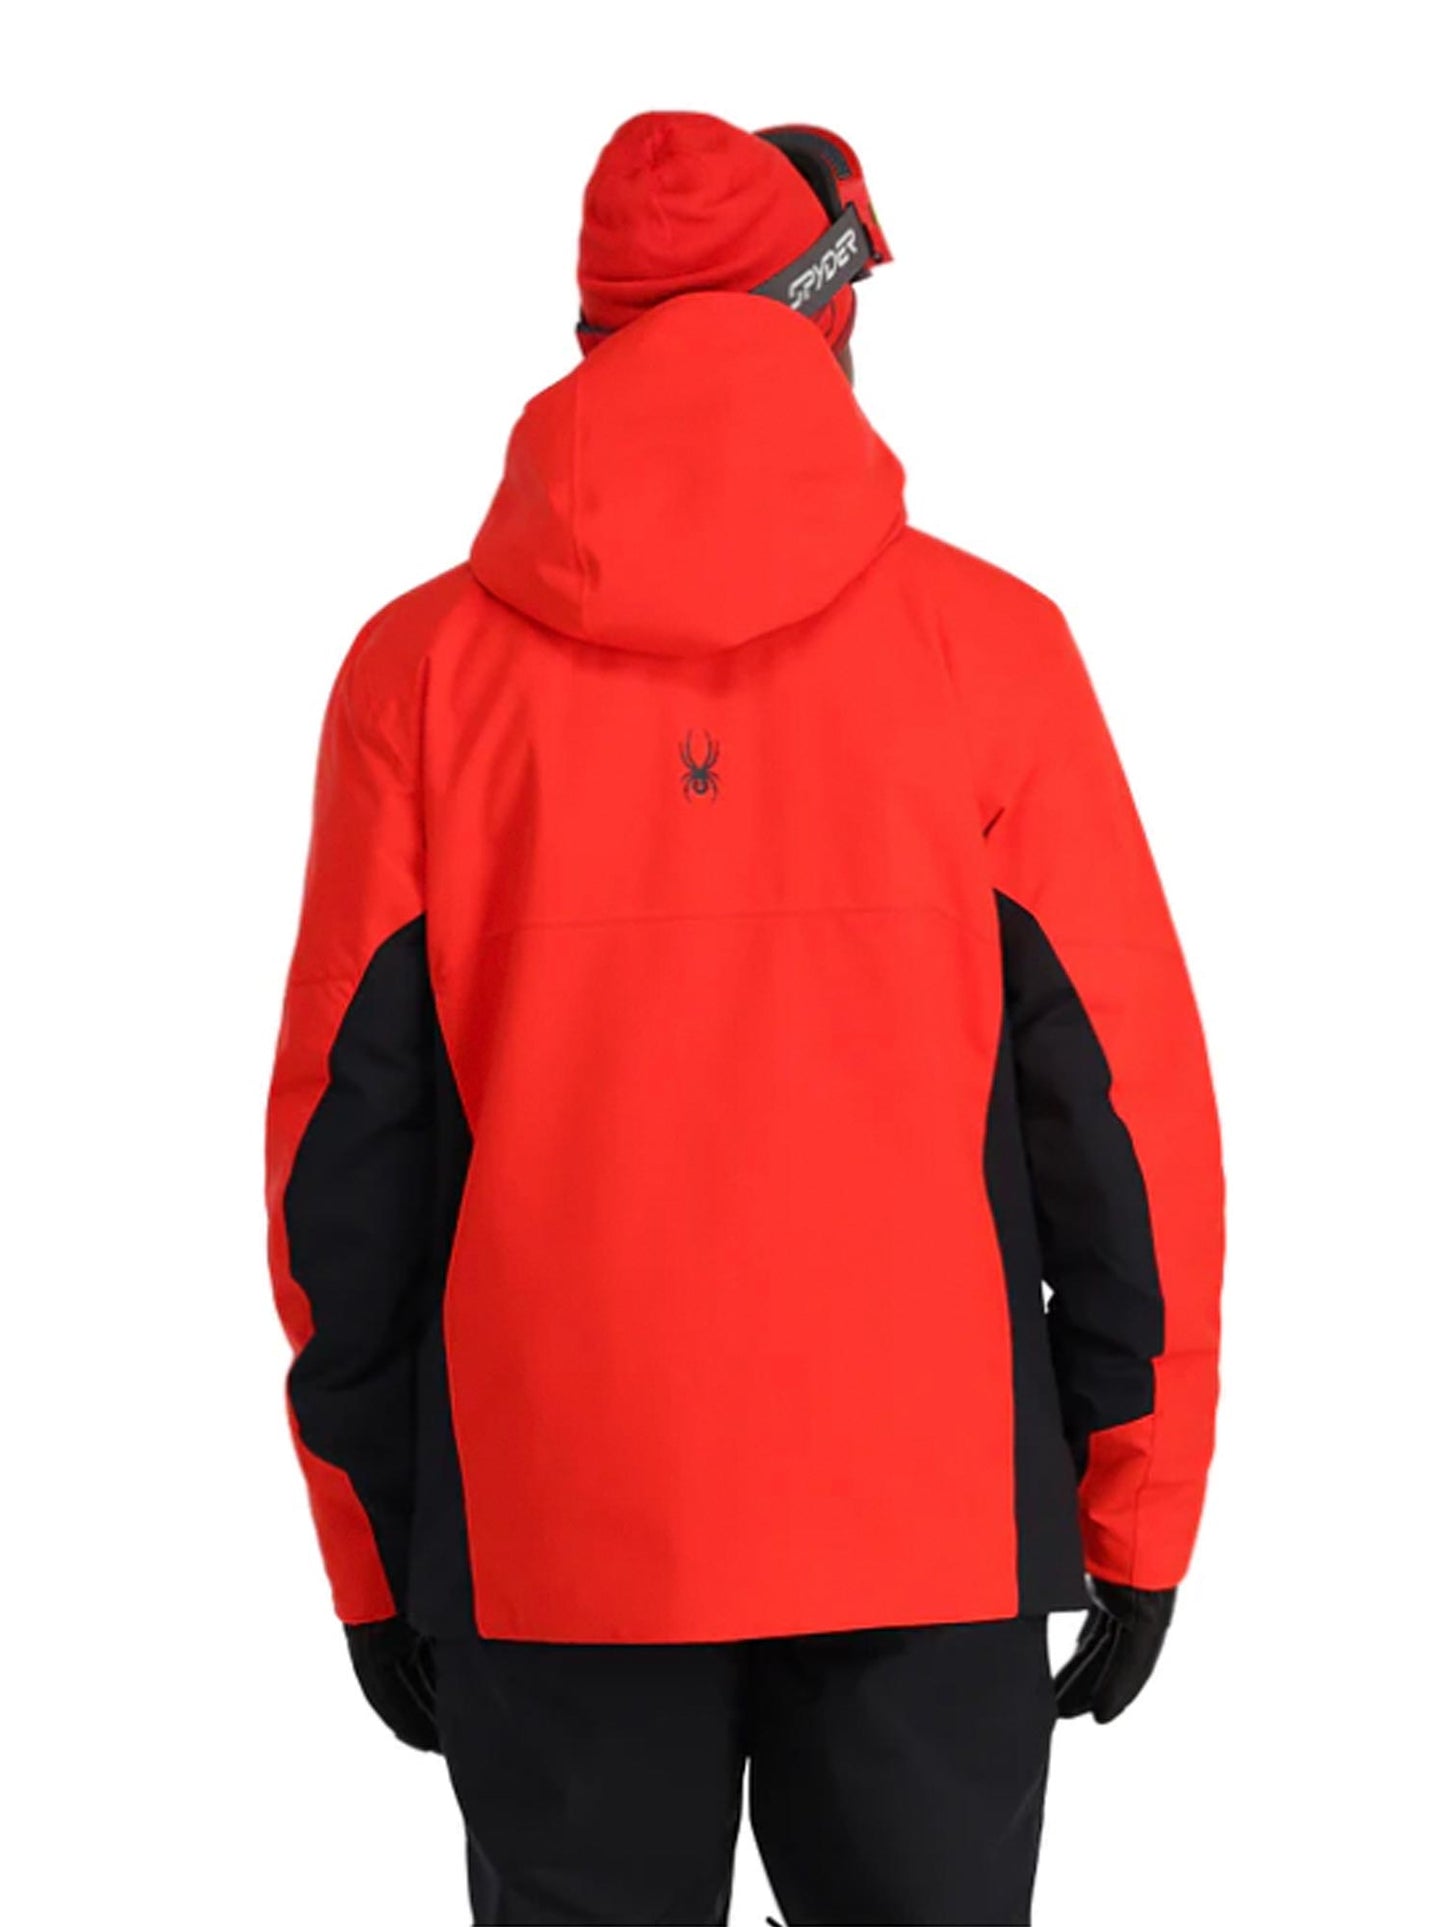 men's Spyder ski jacket, red with black accents.